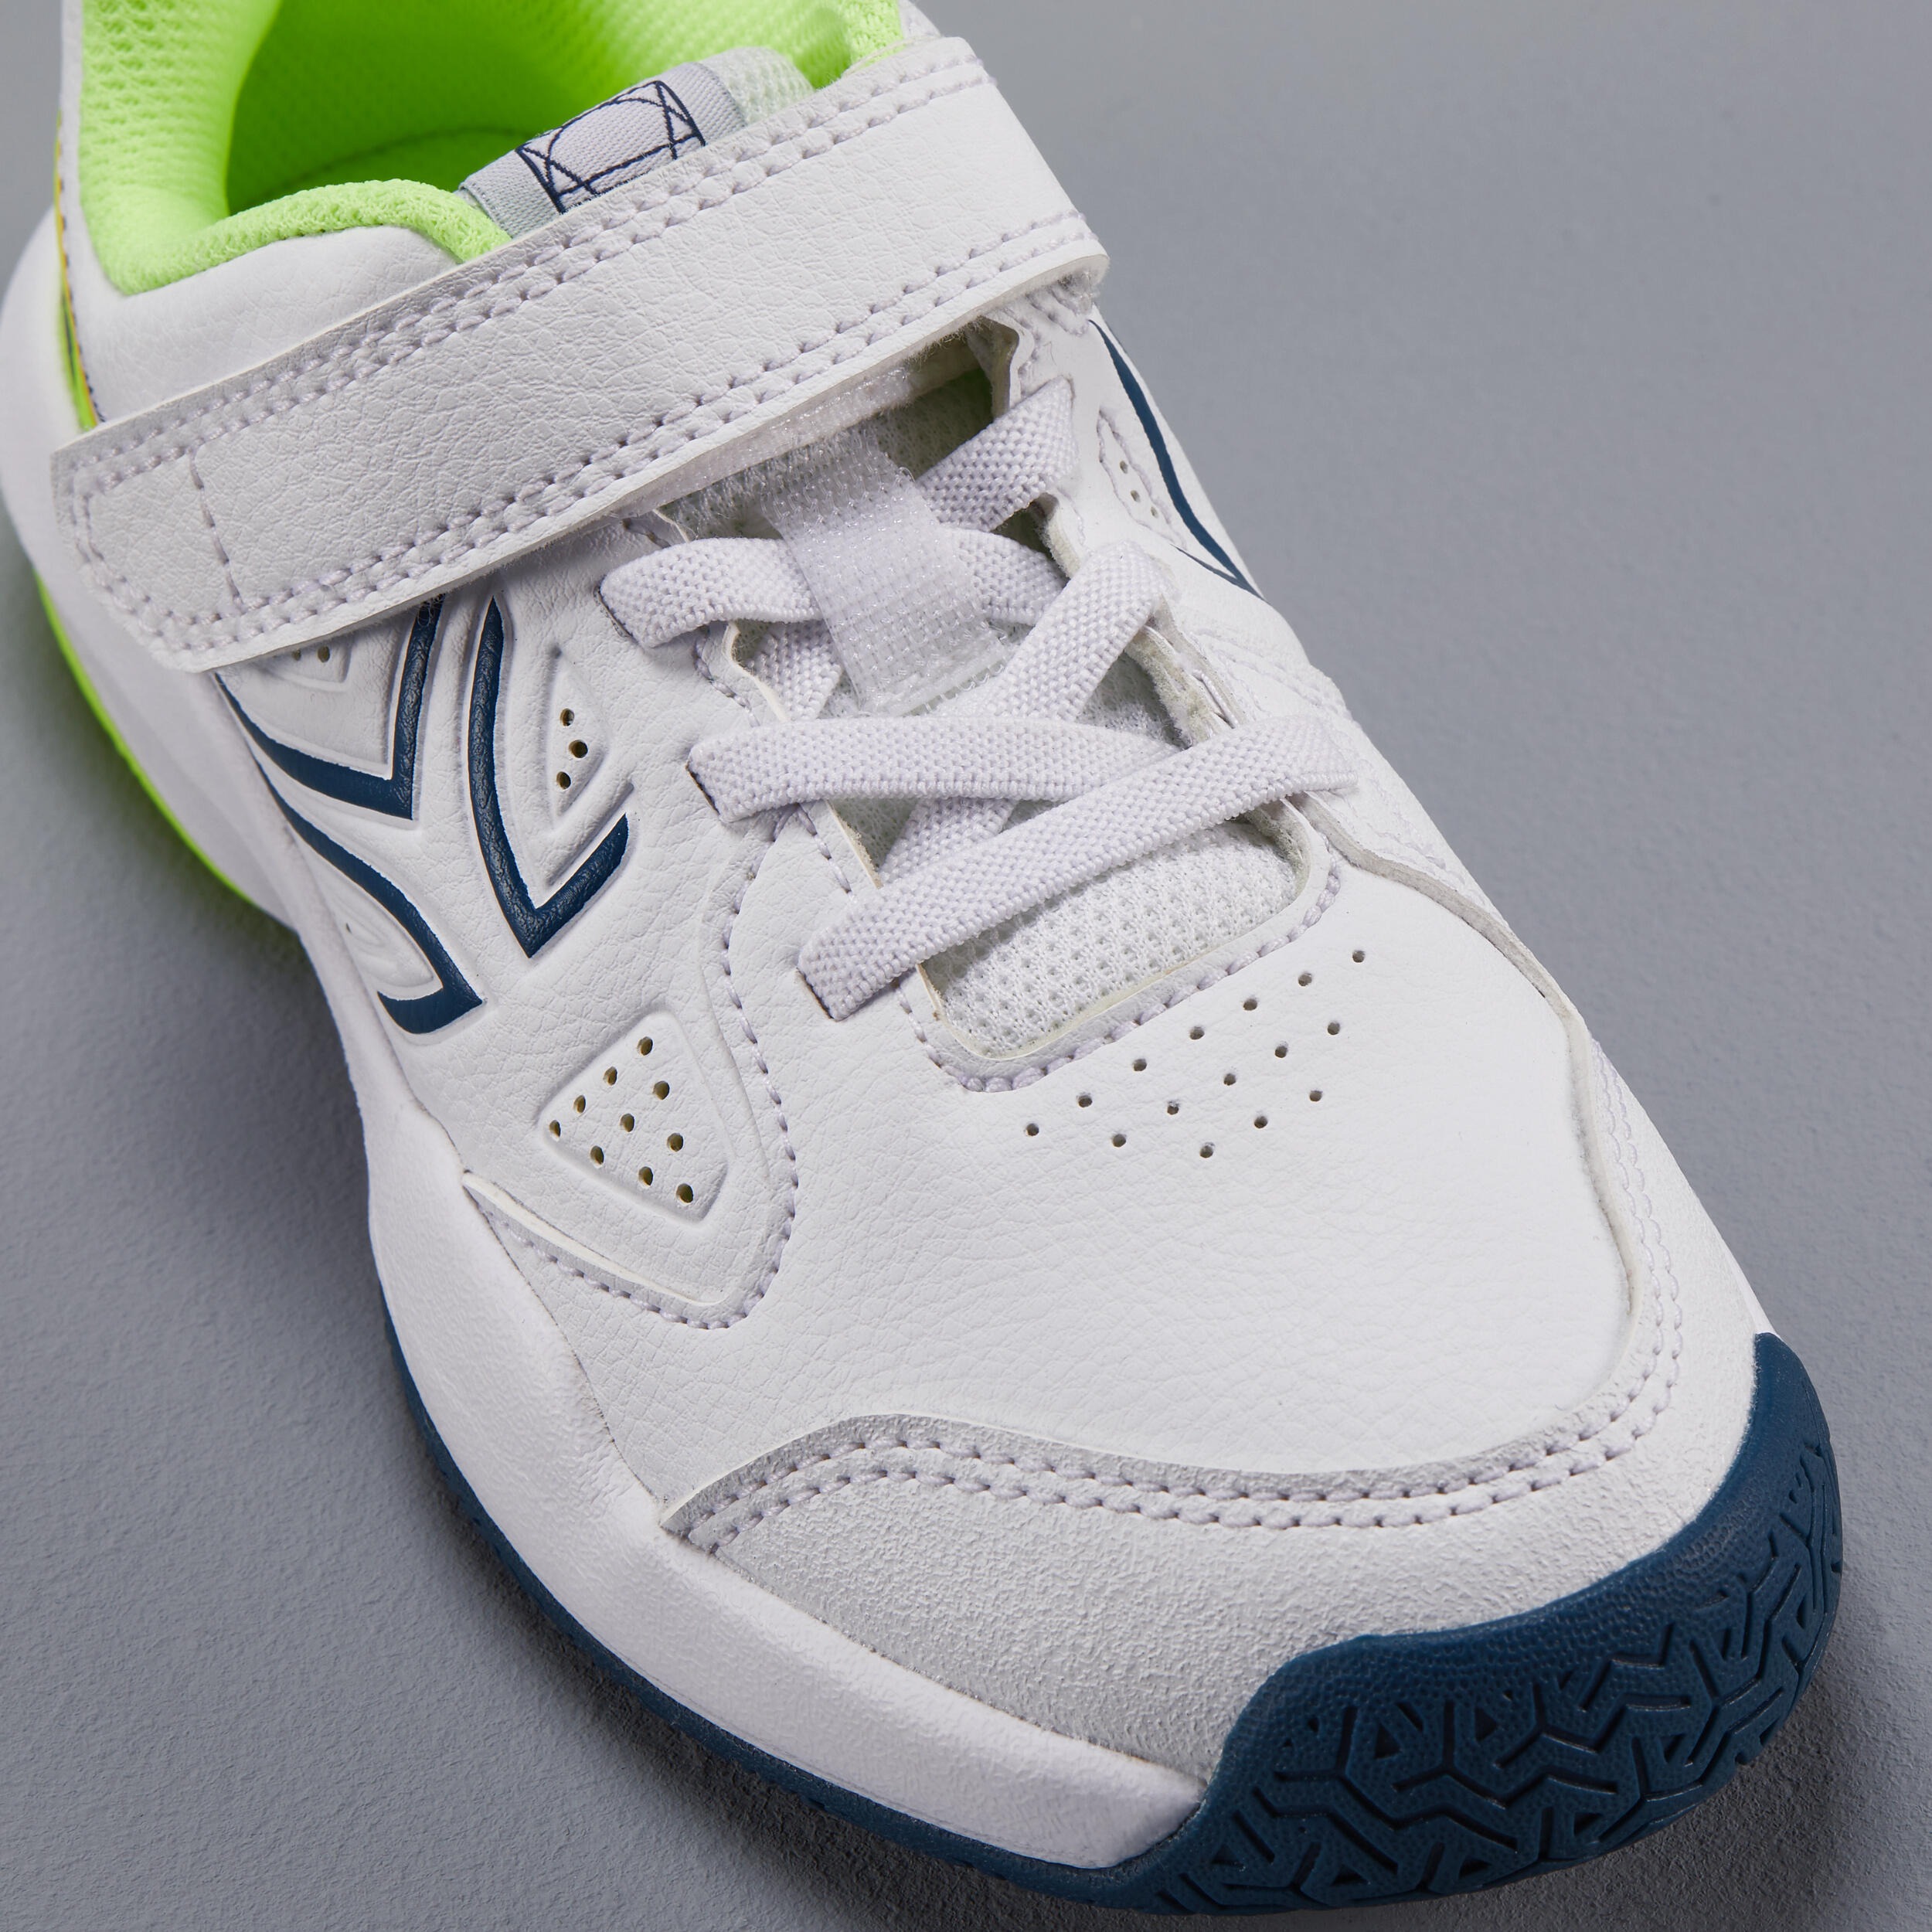 Kids' Tennis Shoes TS530 - White/Yellow 6/7